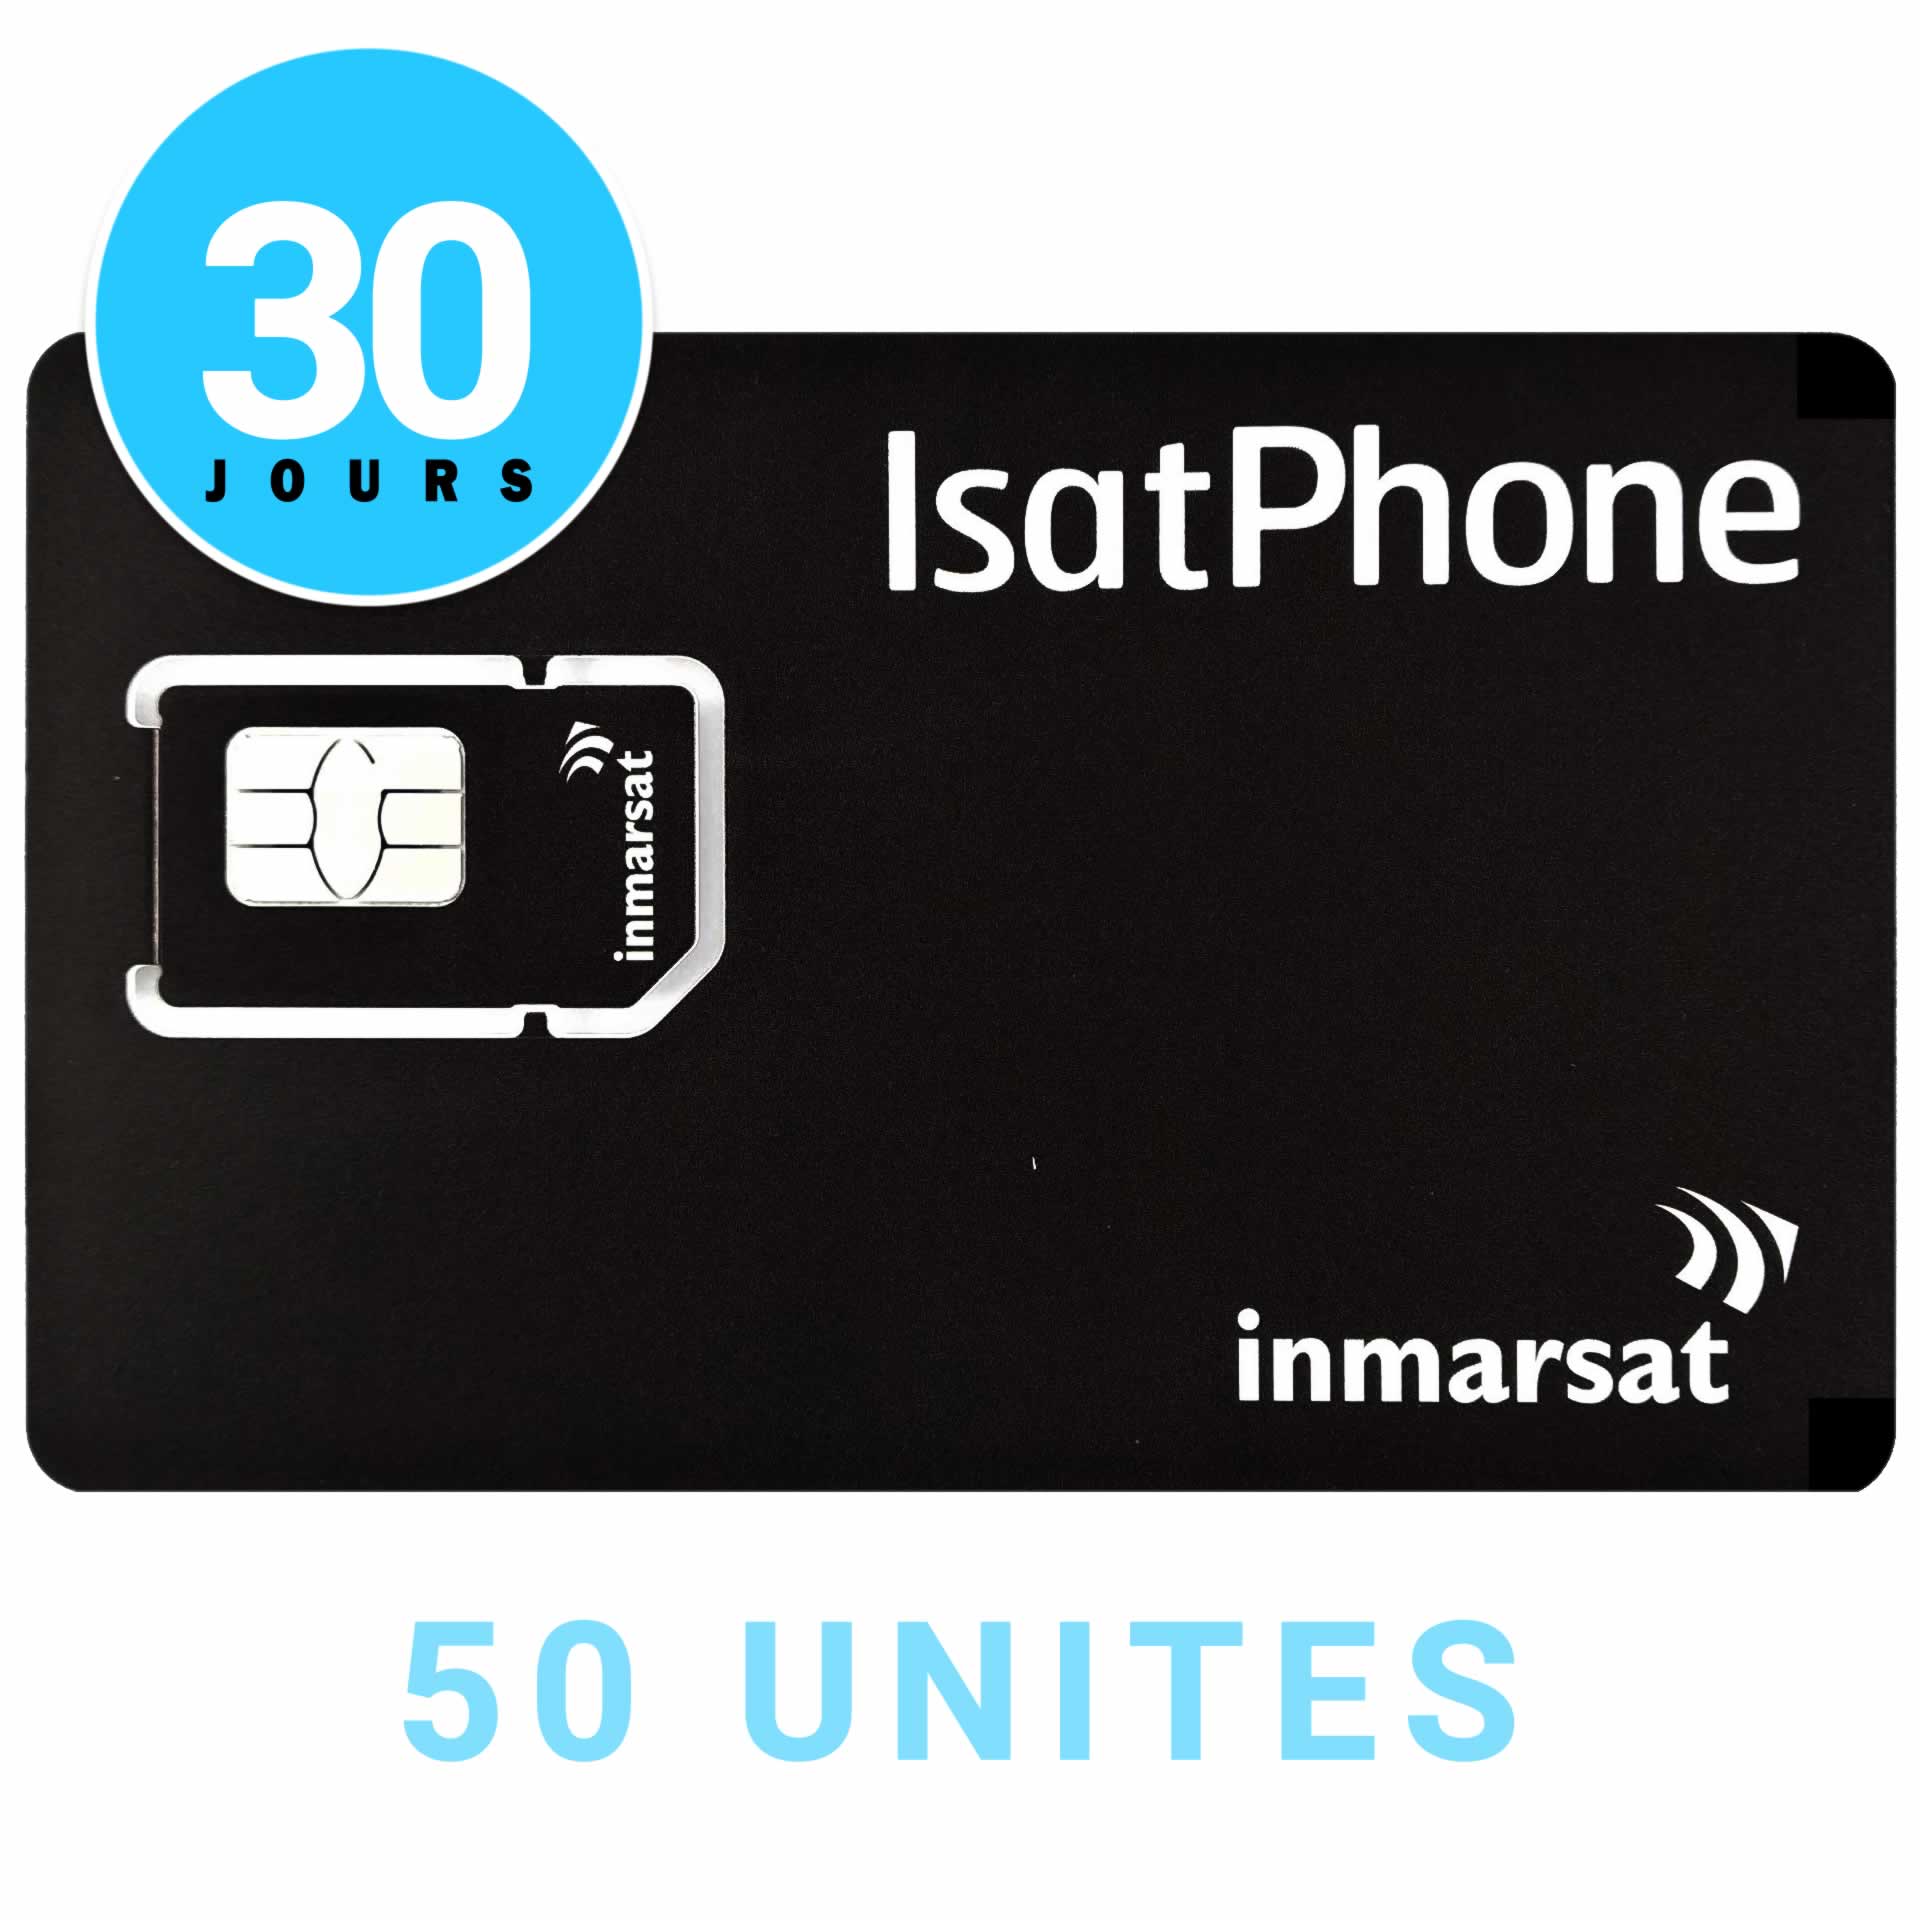 Carte Prépayée INMARSAT Rechargeable ISATPHONE - 50 UNITES - 30 JOURS